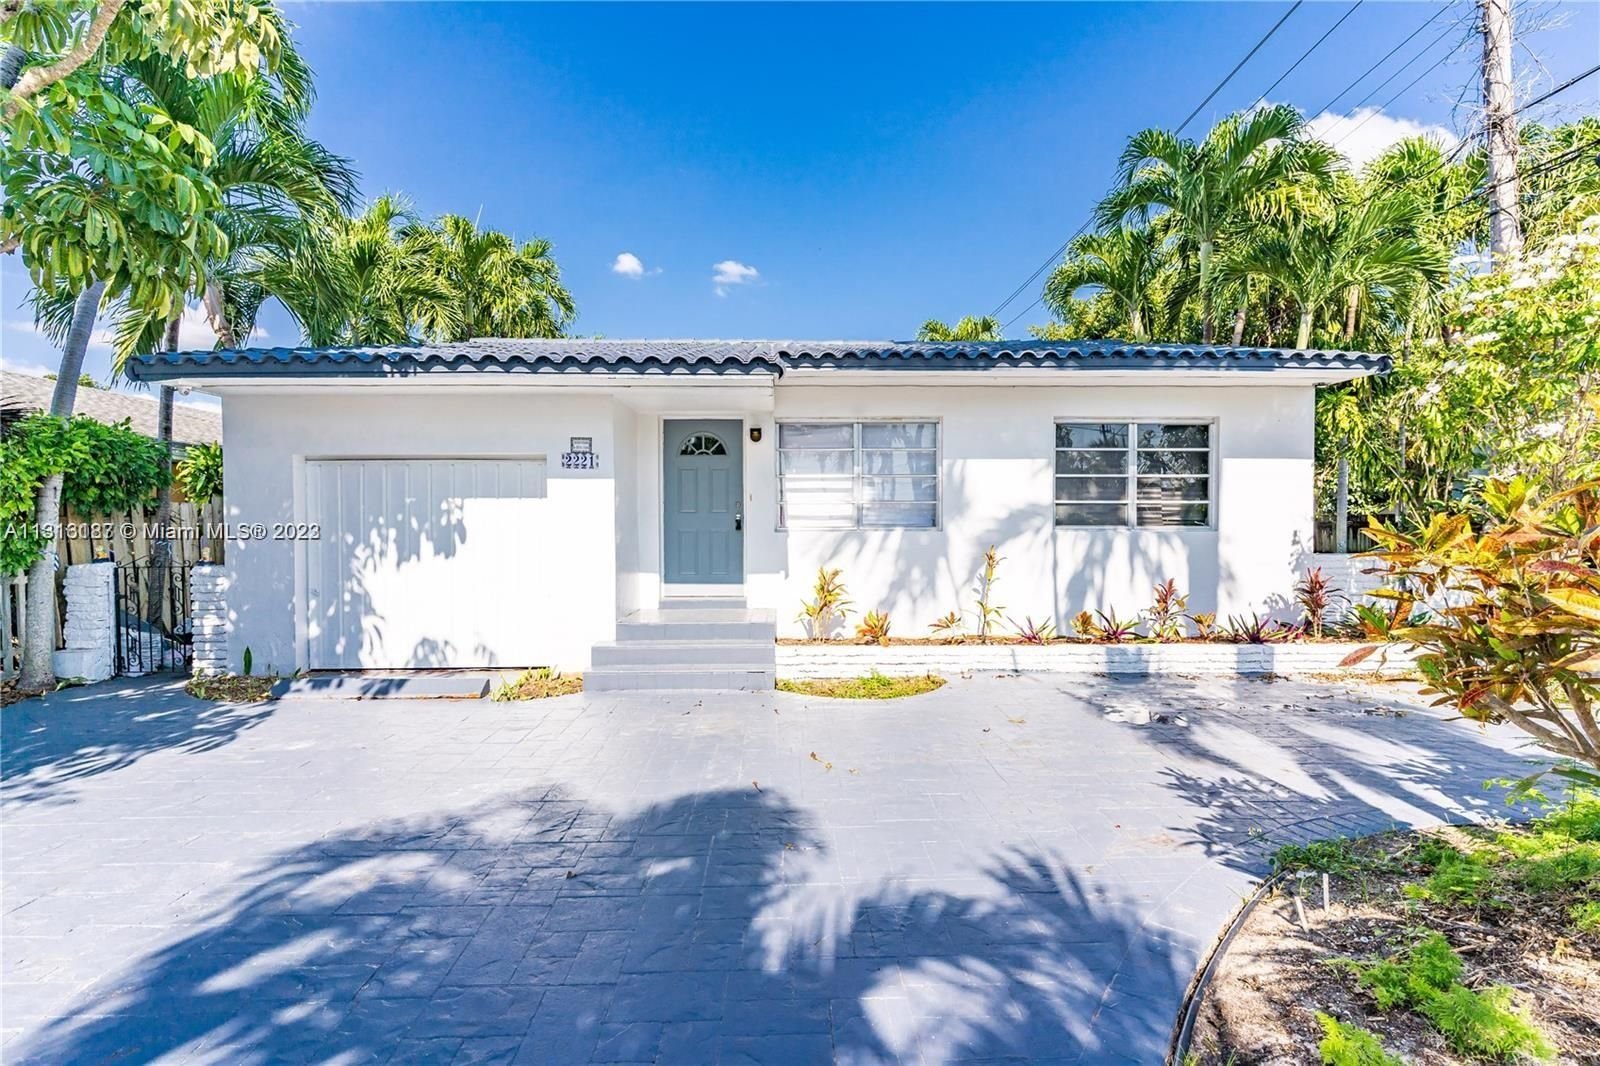 Real estate property located at 2221 13th St, Miami-Dade County, Miami, FL